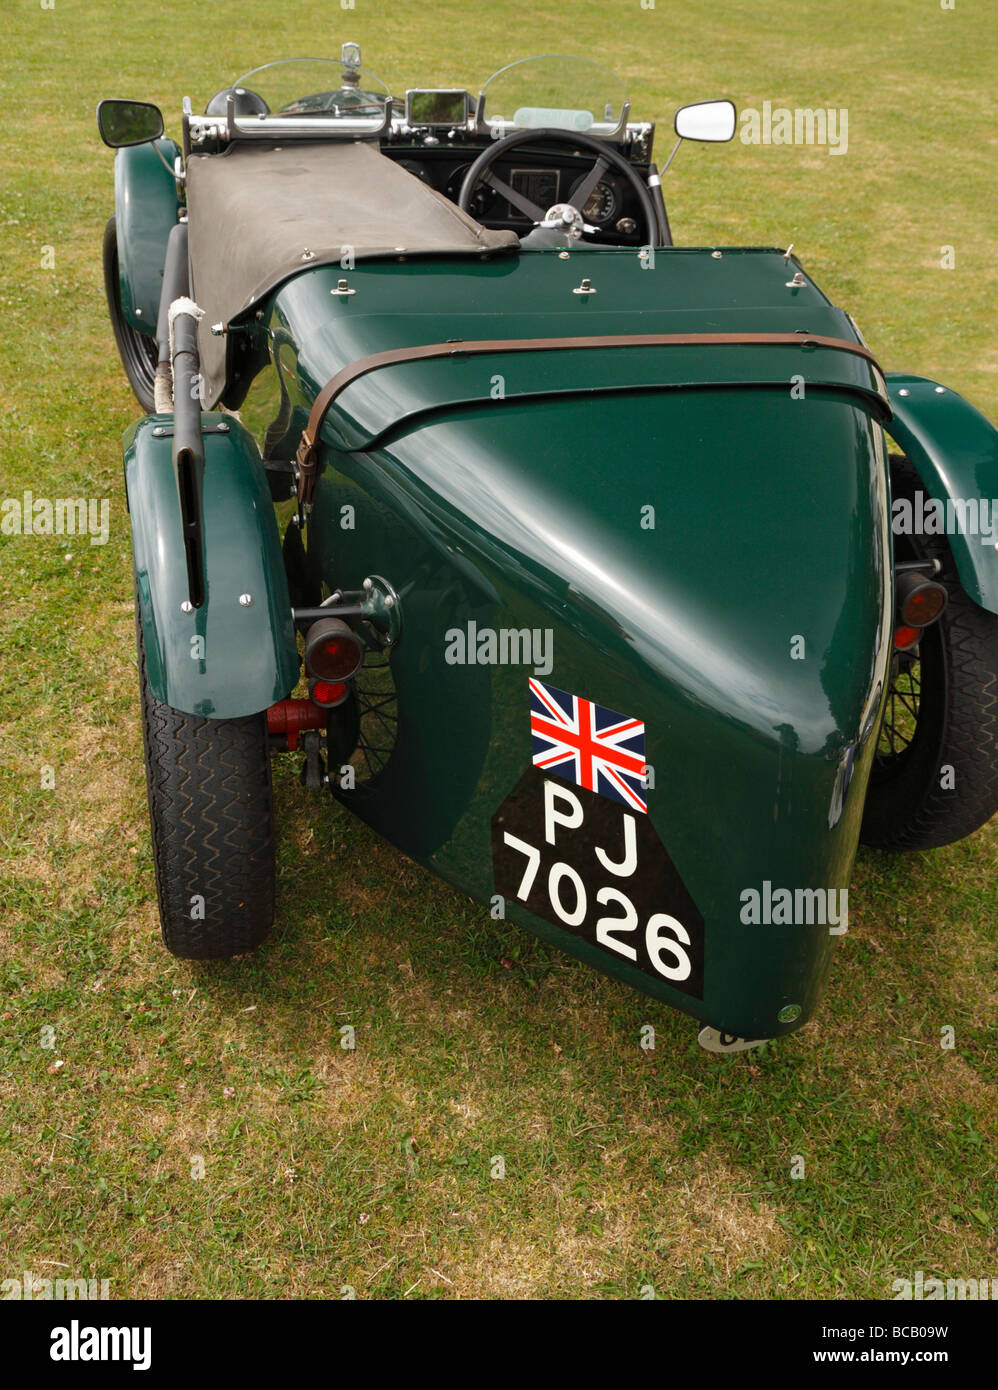 Un British Racing Green Austin siete Ulster réplicas de coches deportivos clásicos. Foto de stock